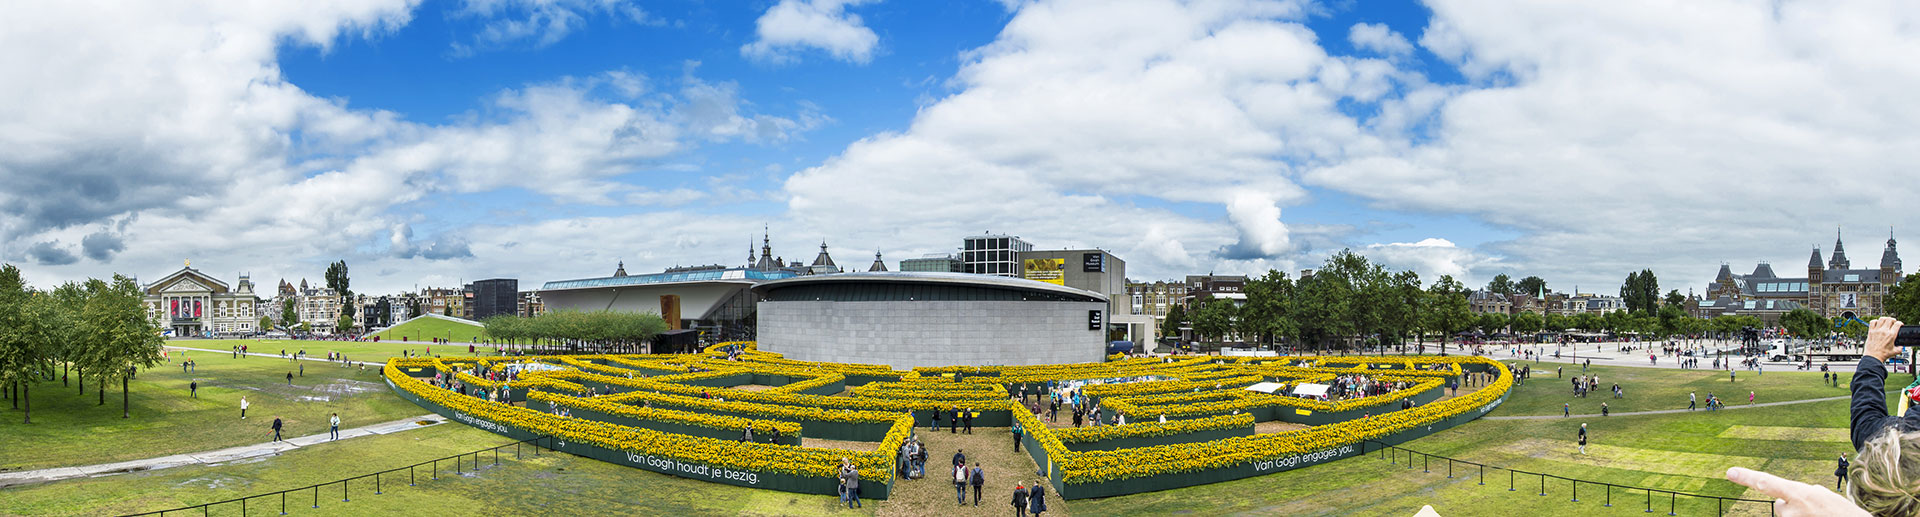 Labyrint van Gogh Museum